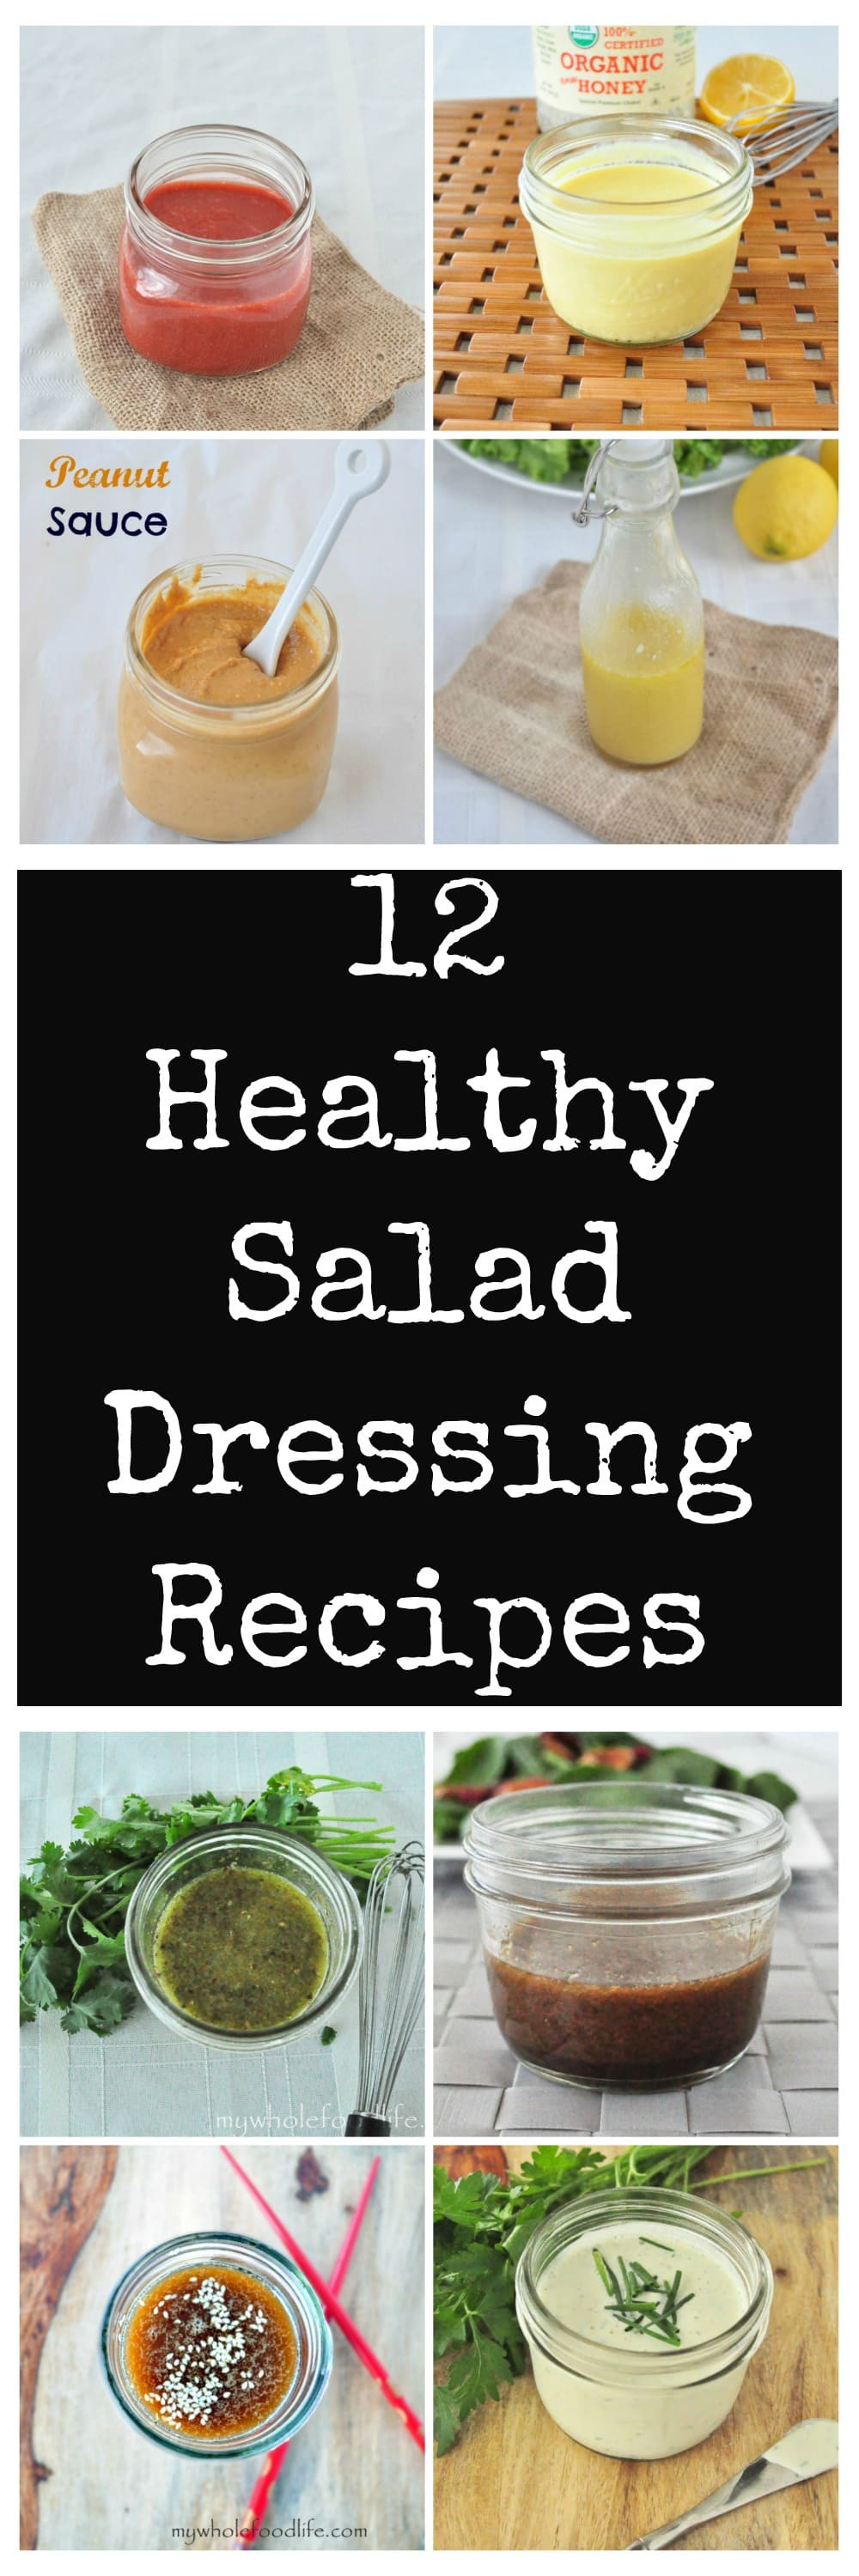 Salads Dressing Recipes Healthy
 12 Healthy Salad Dressing Recipes My Whole Food Life